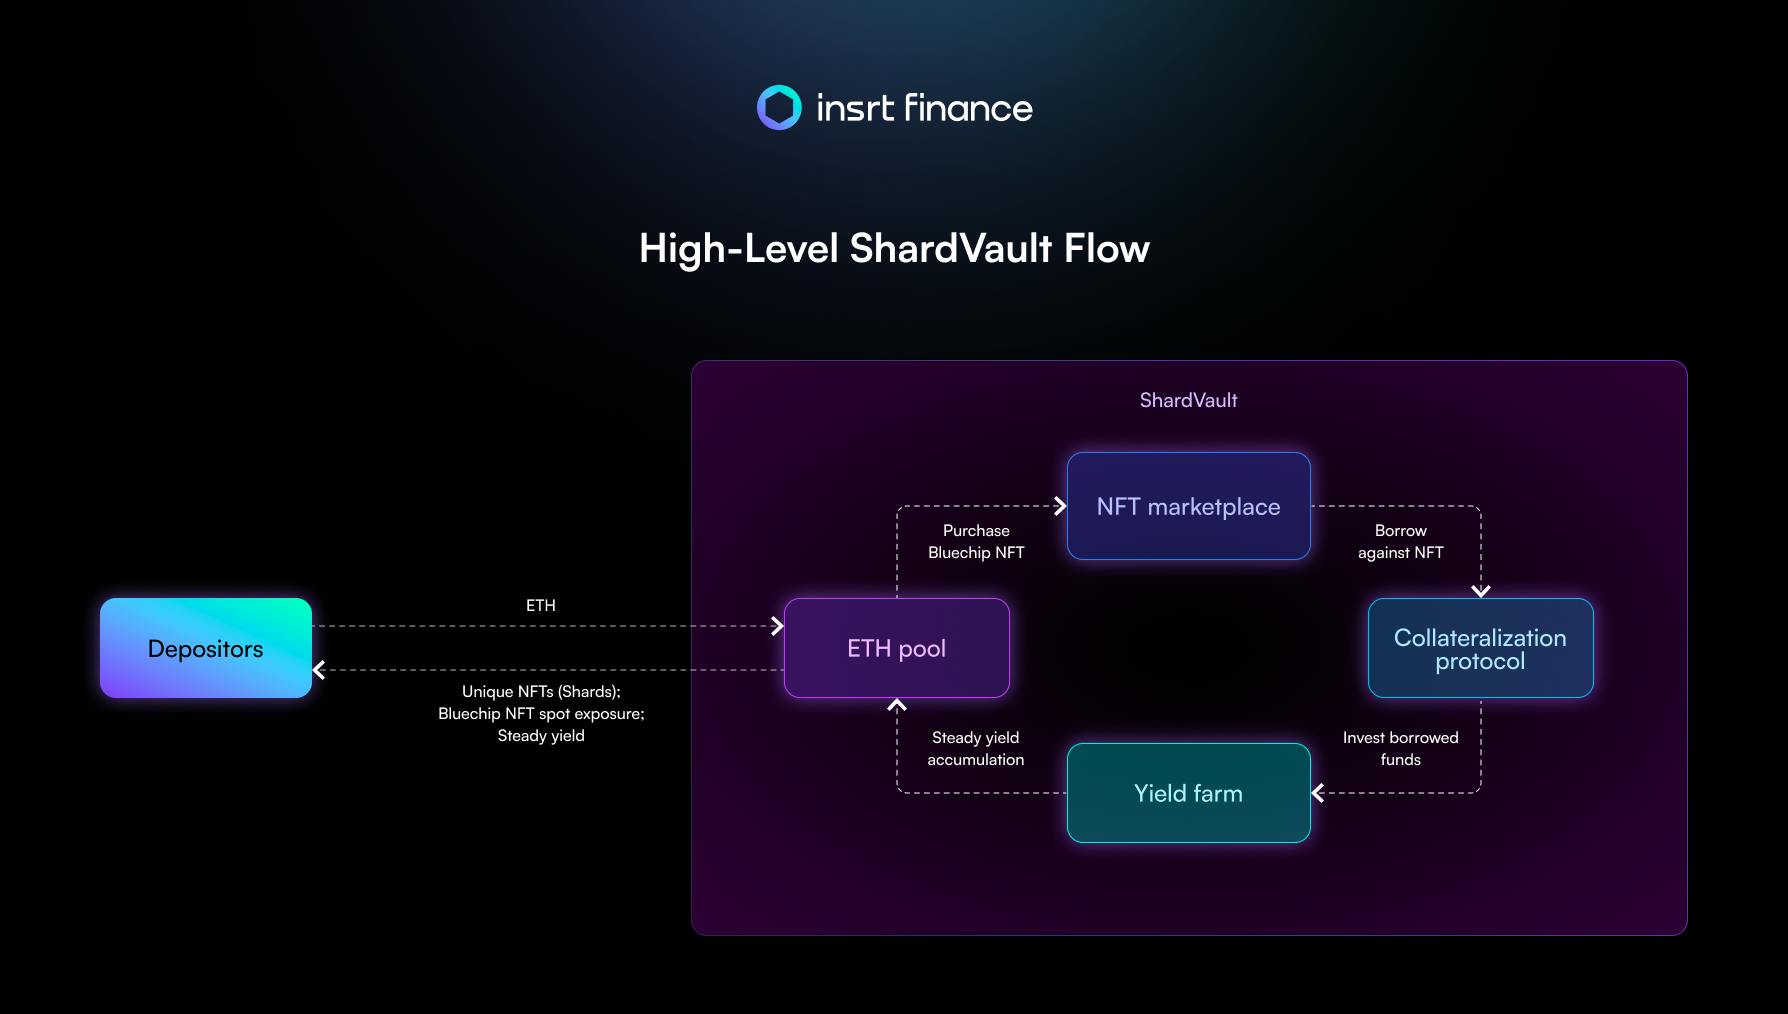 insrt finance 針對 ShardVault 所製作的運作說明圖。